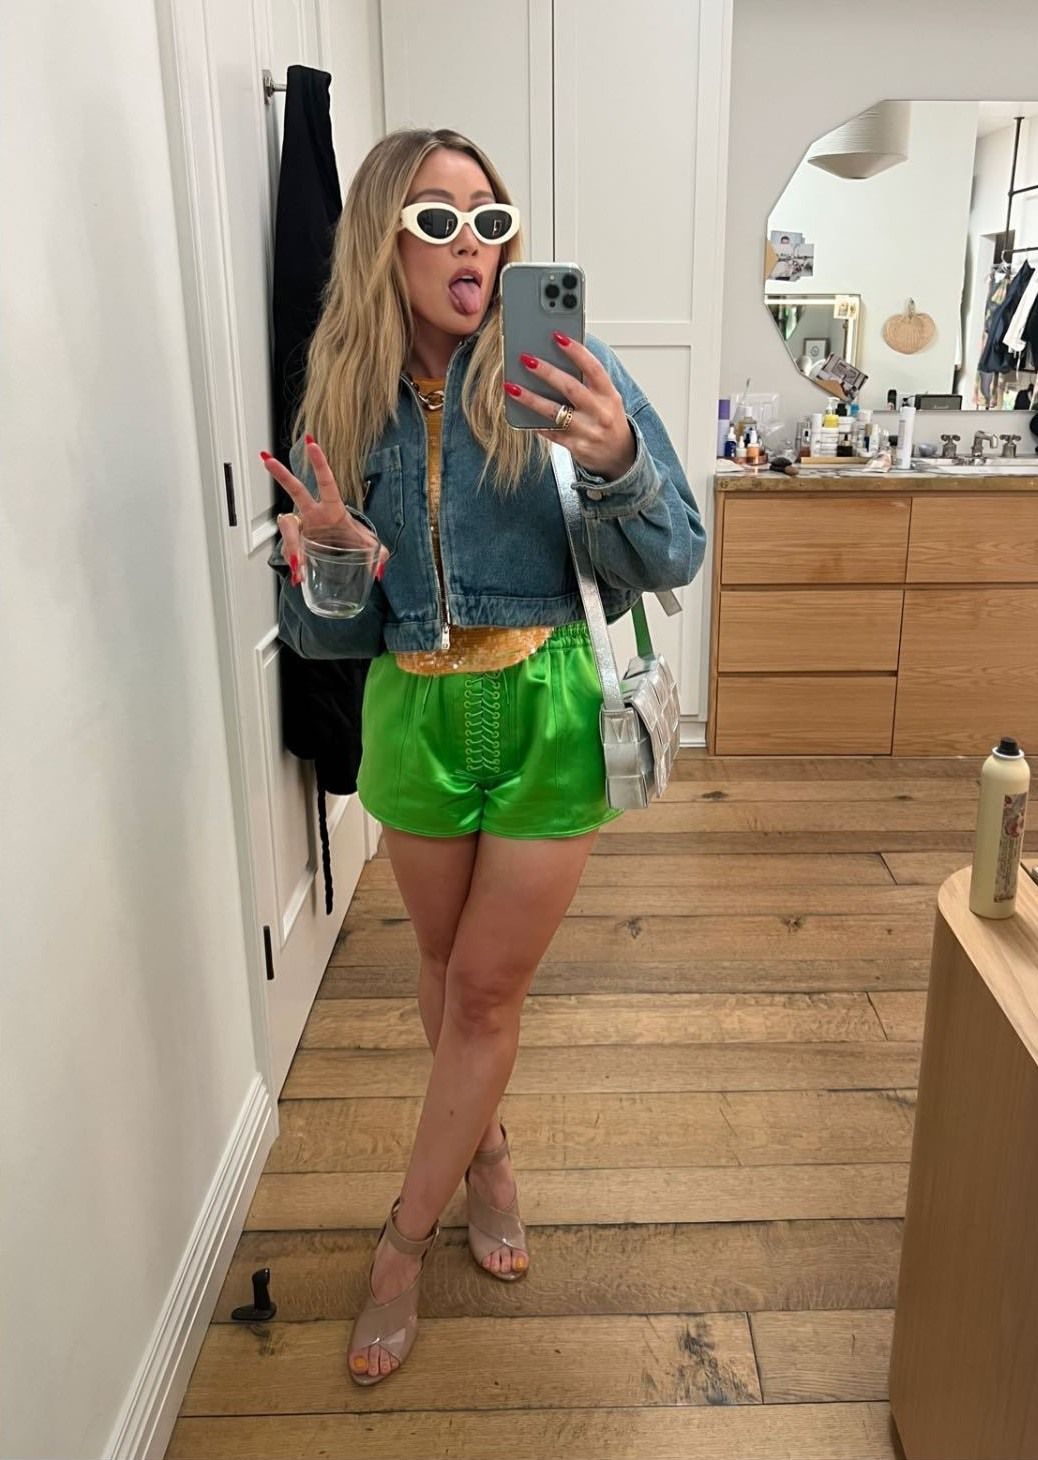 Hilary Duff - Instagram story | Lauren Conrad style